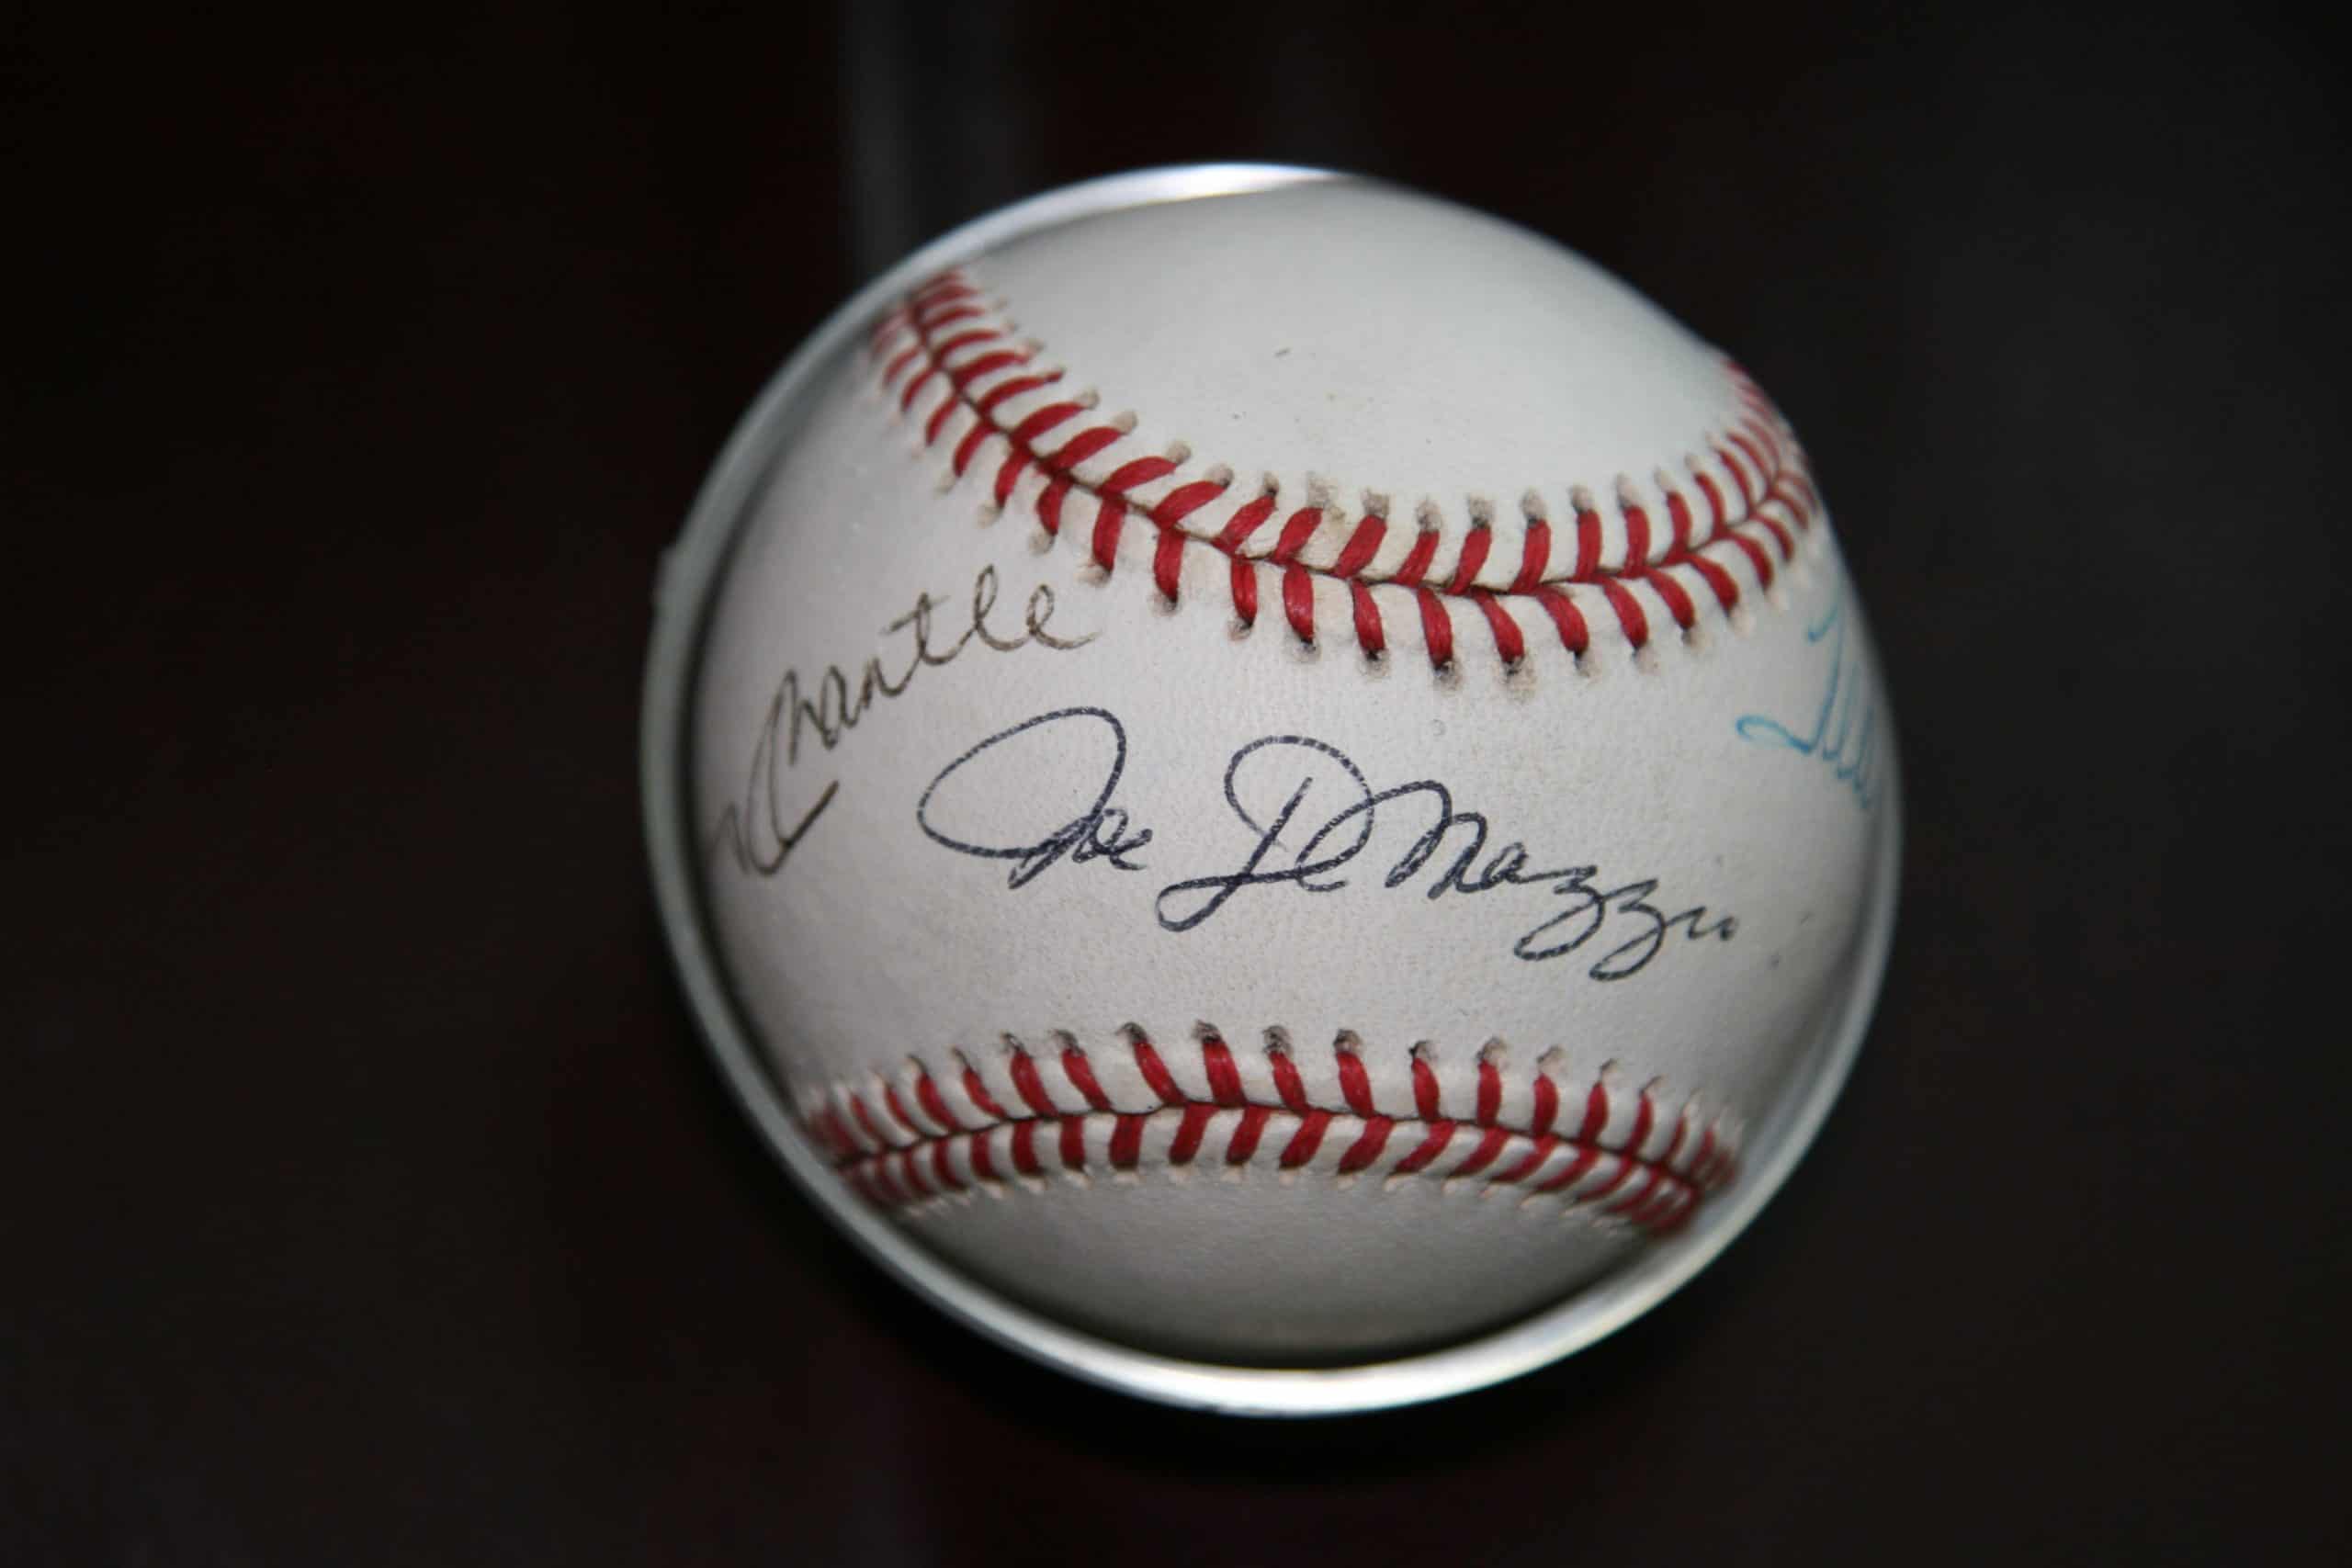 Joe DiMaggio, Mickey Mantle, Ted Williams Autographed Memorabilia